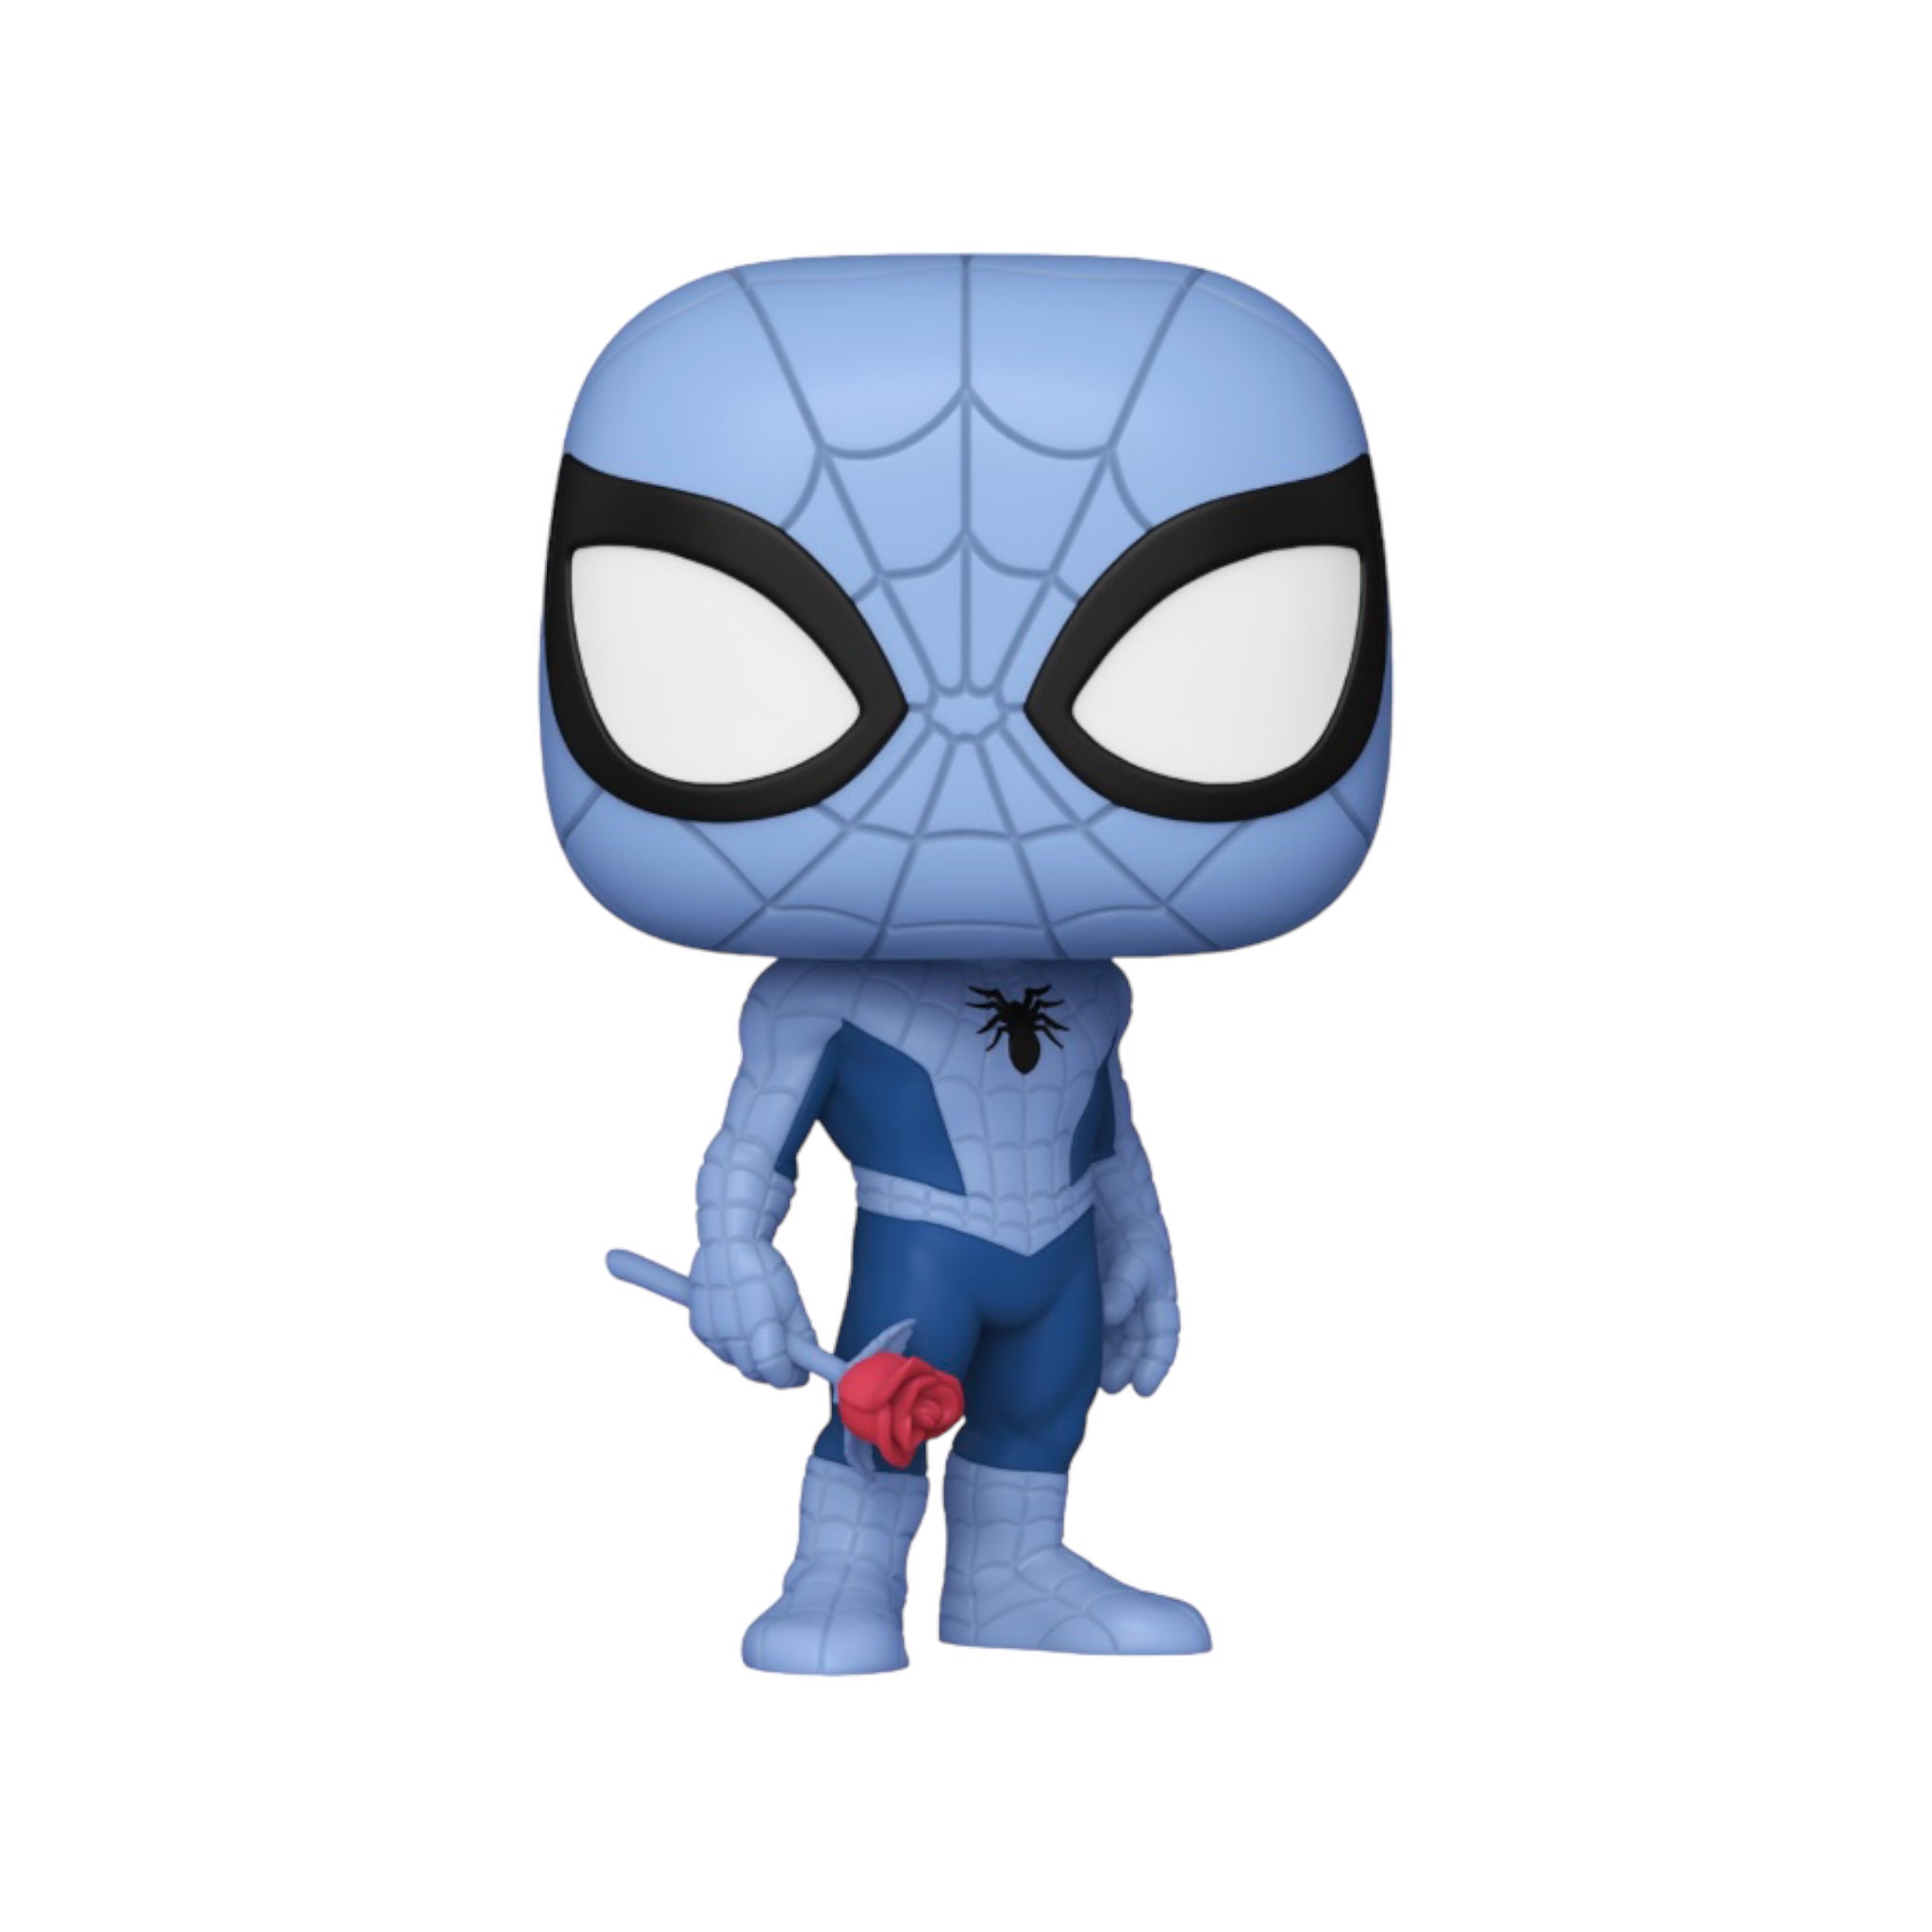 Spider-Man #1355 Funko Pop! - Marvel - Marvel Collector Corps Exclusive